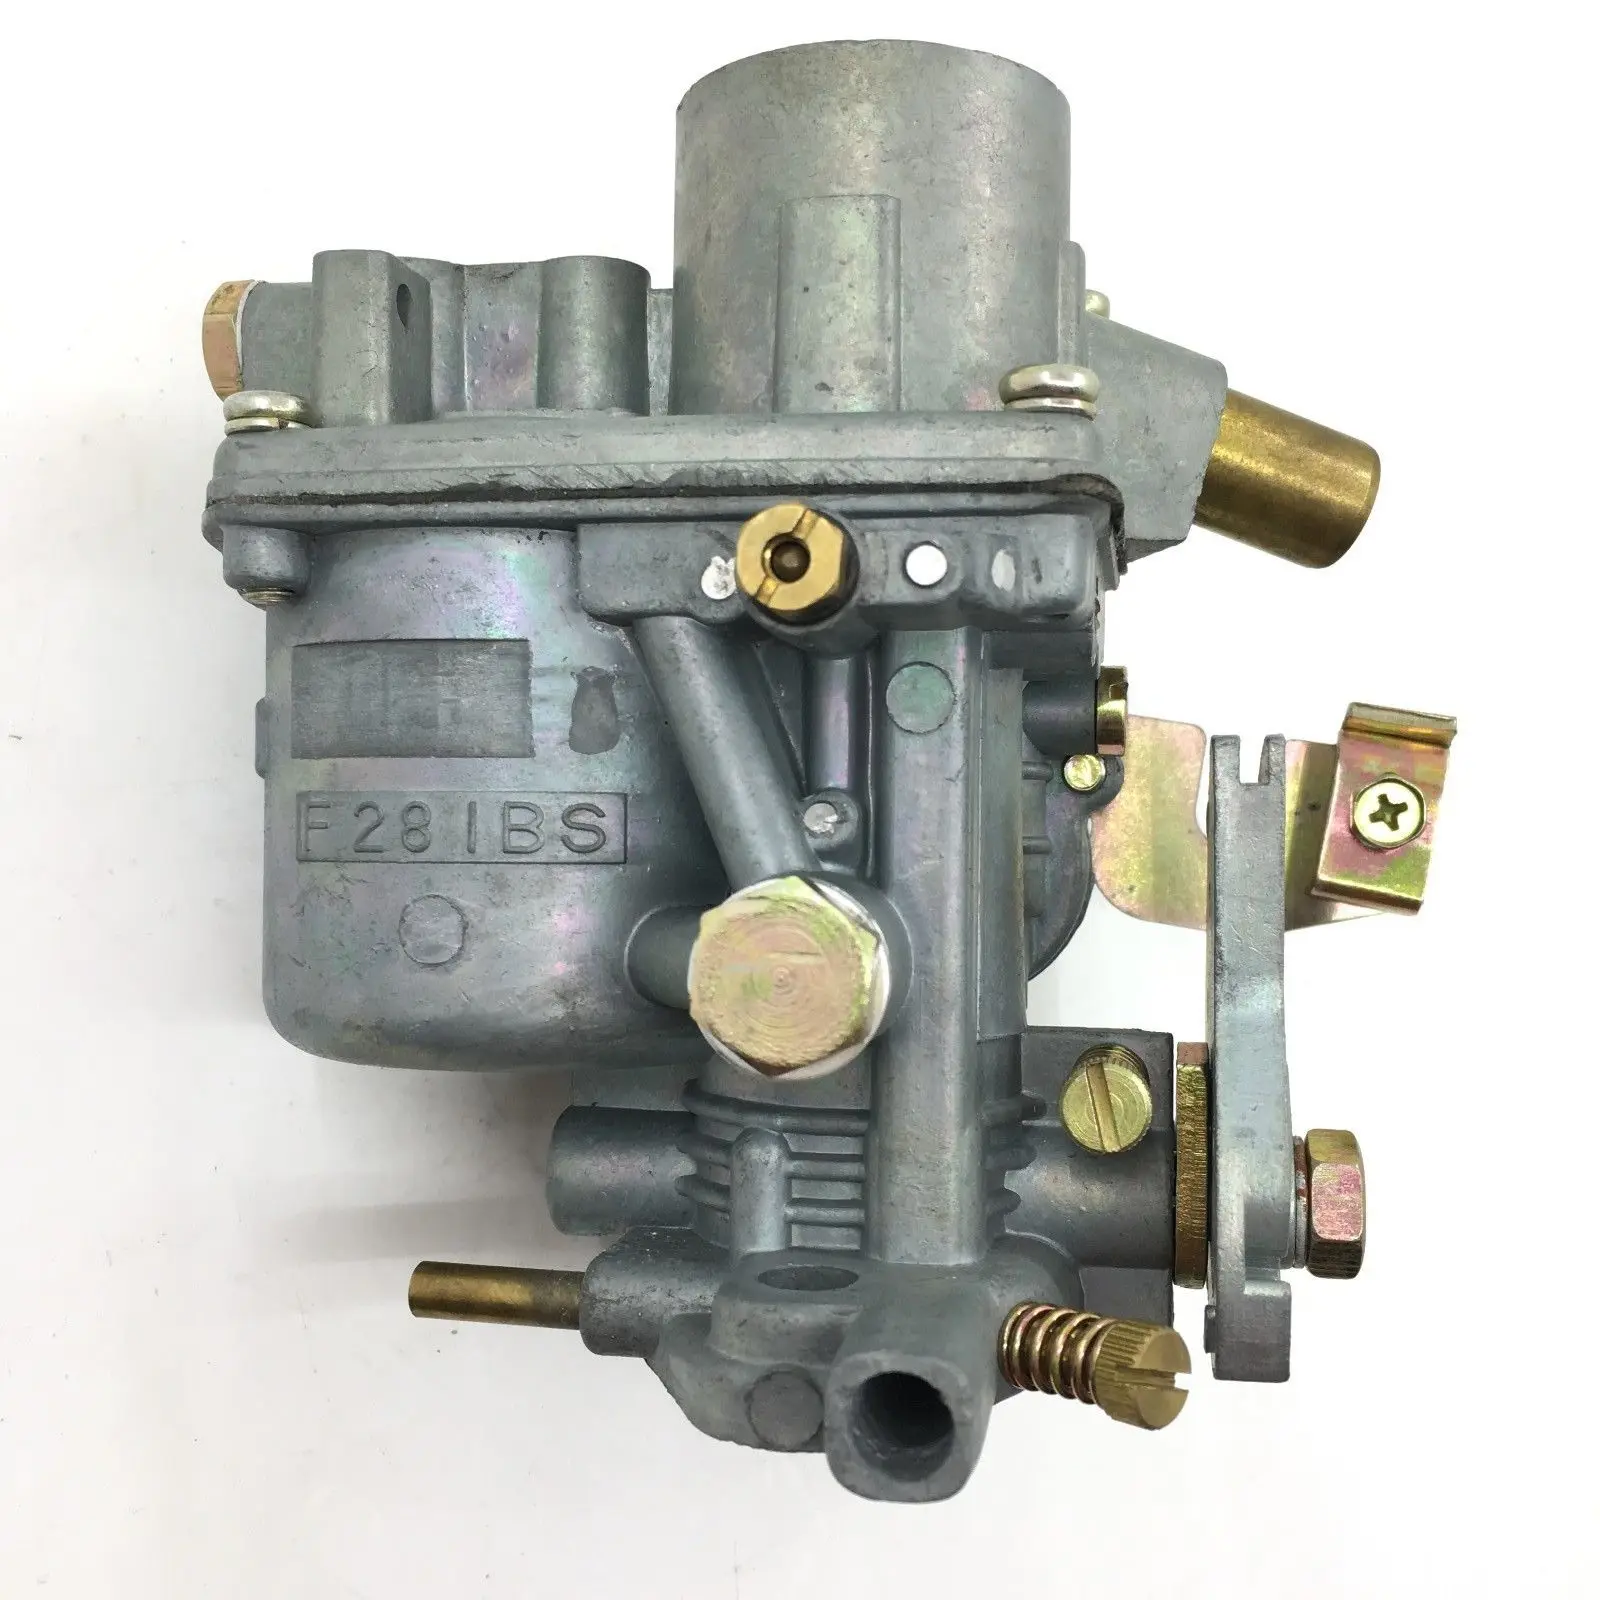 Карбюратор sherrybergcarburettor 28 IBS для RENAULT DAUPHINE 1090(тип Solex) Carburateur carb Solex 28 мм carburator free